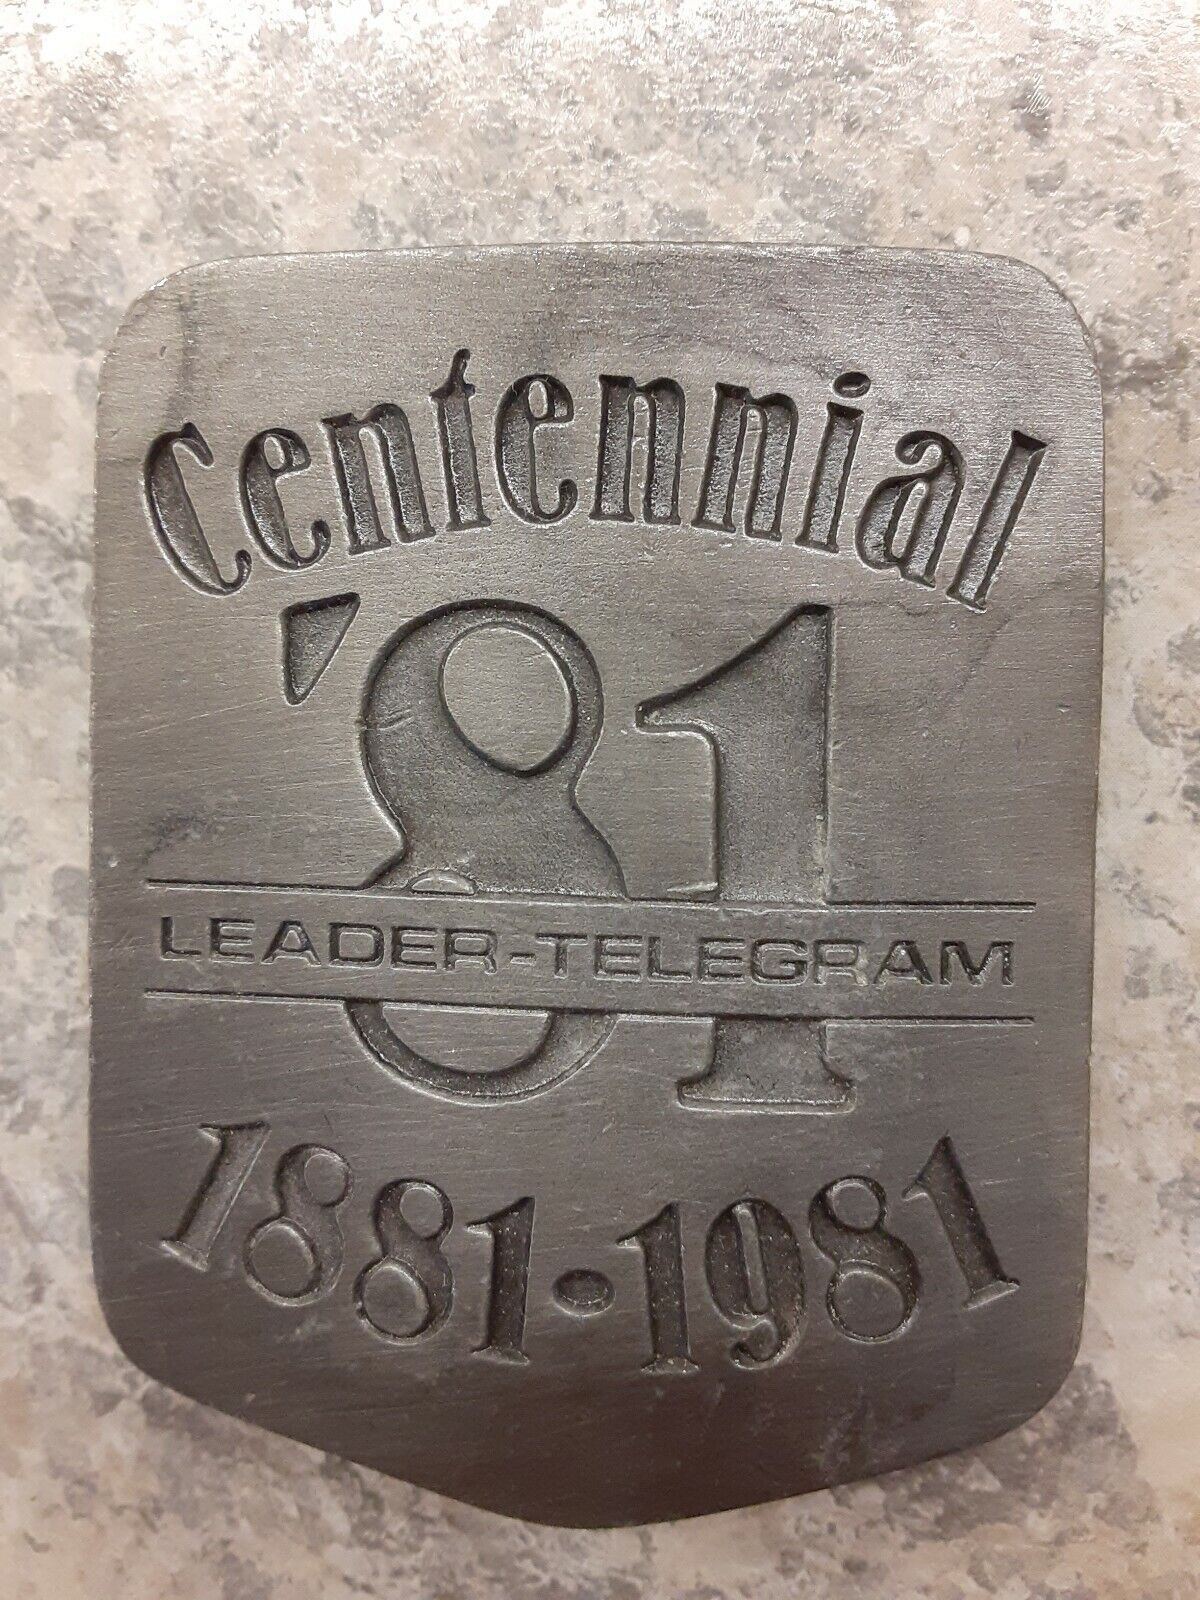 Centennial Belt Buckle Eau Claire WI Leader Telegram 1881-1981